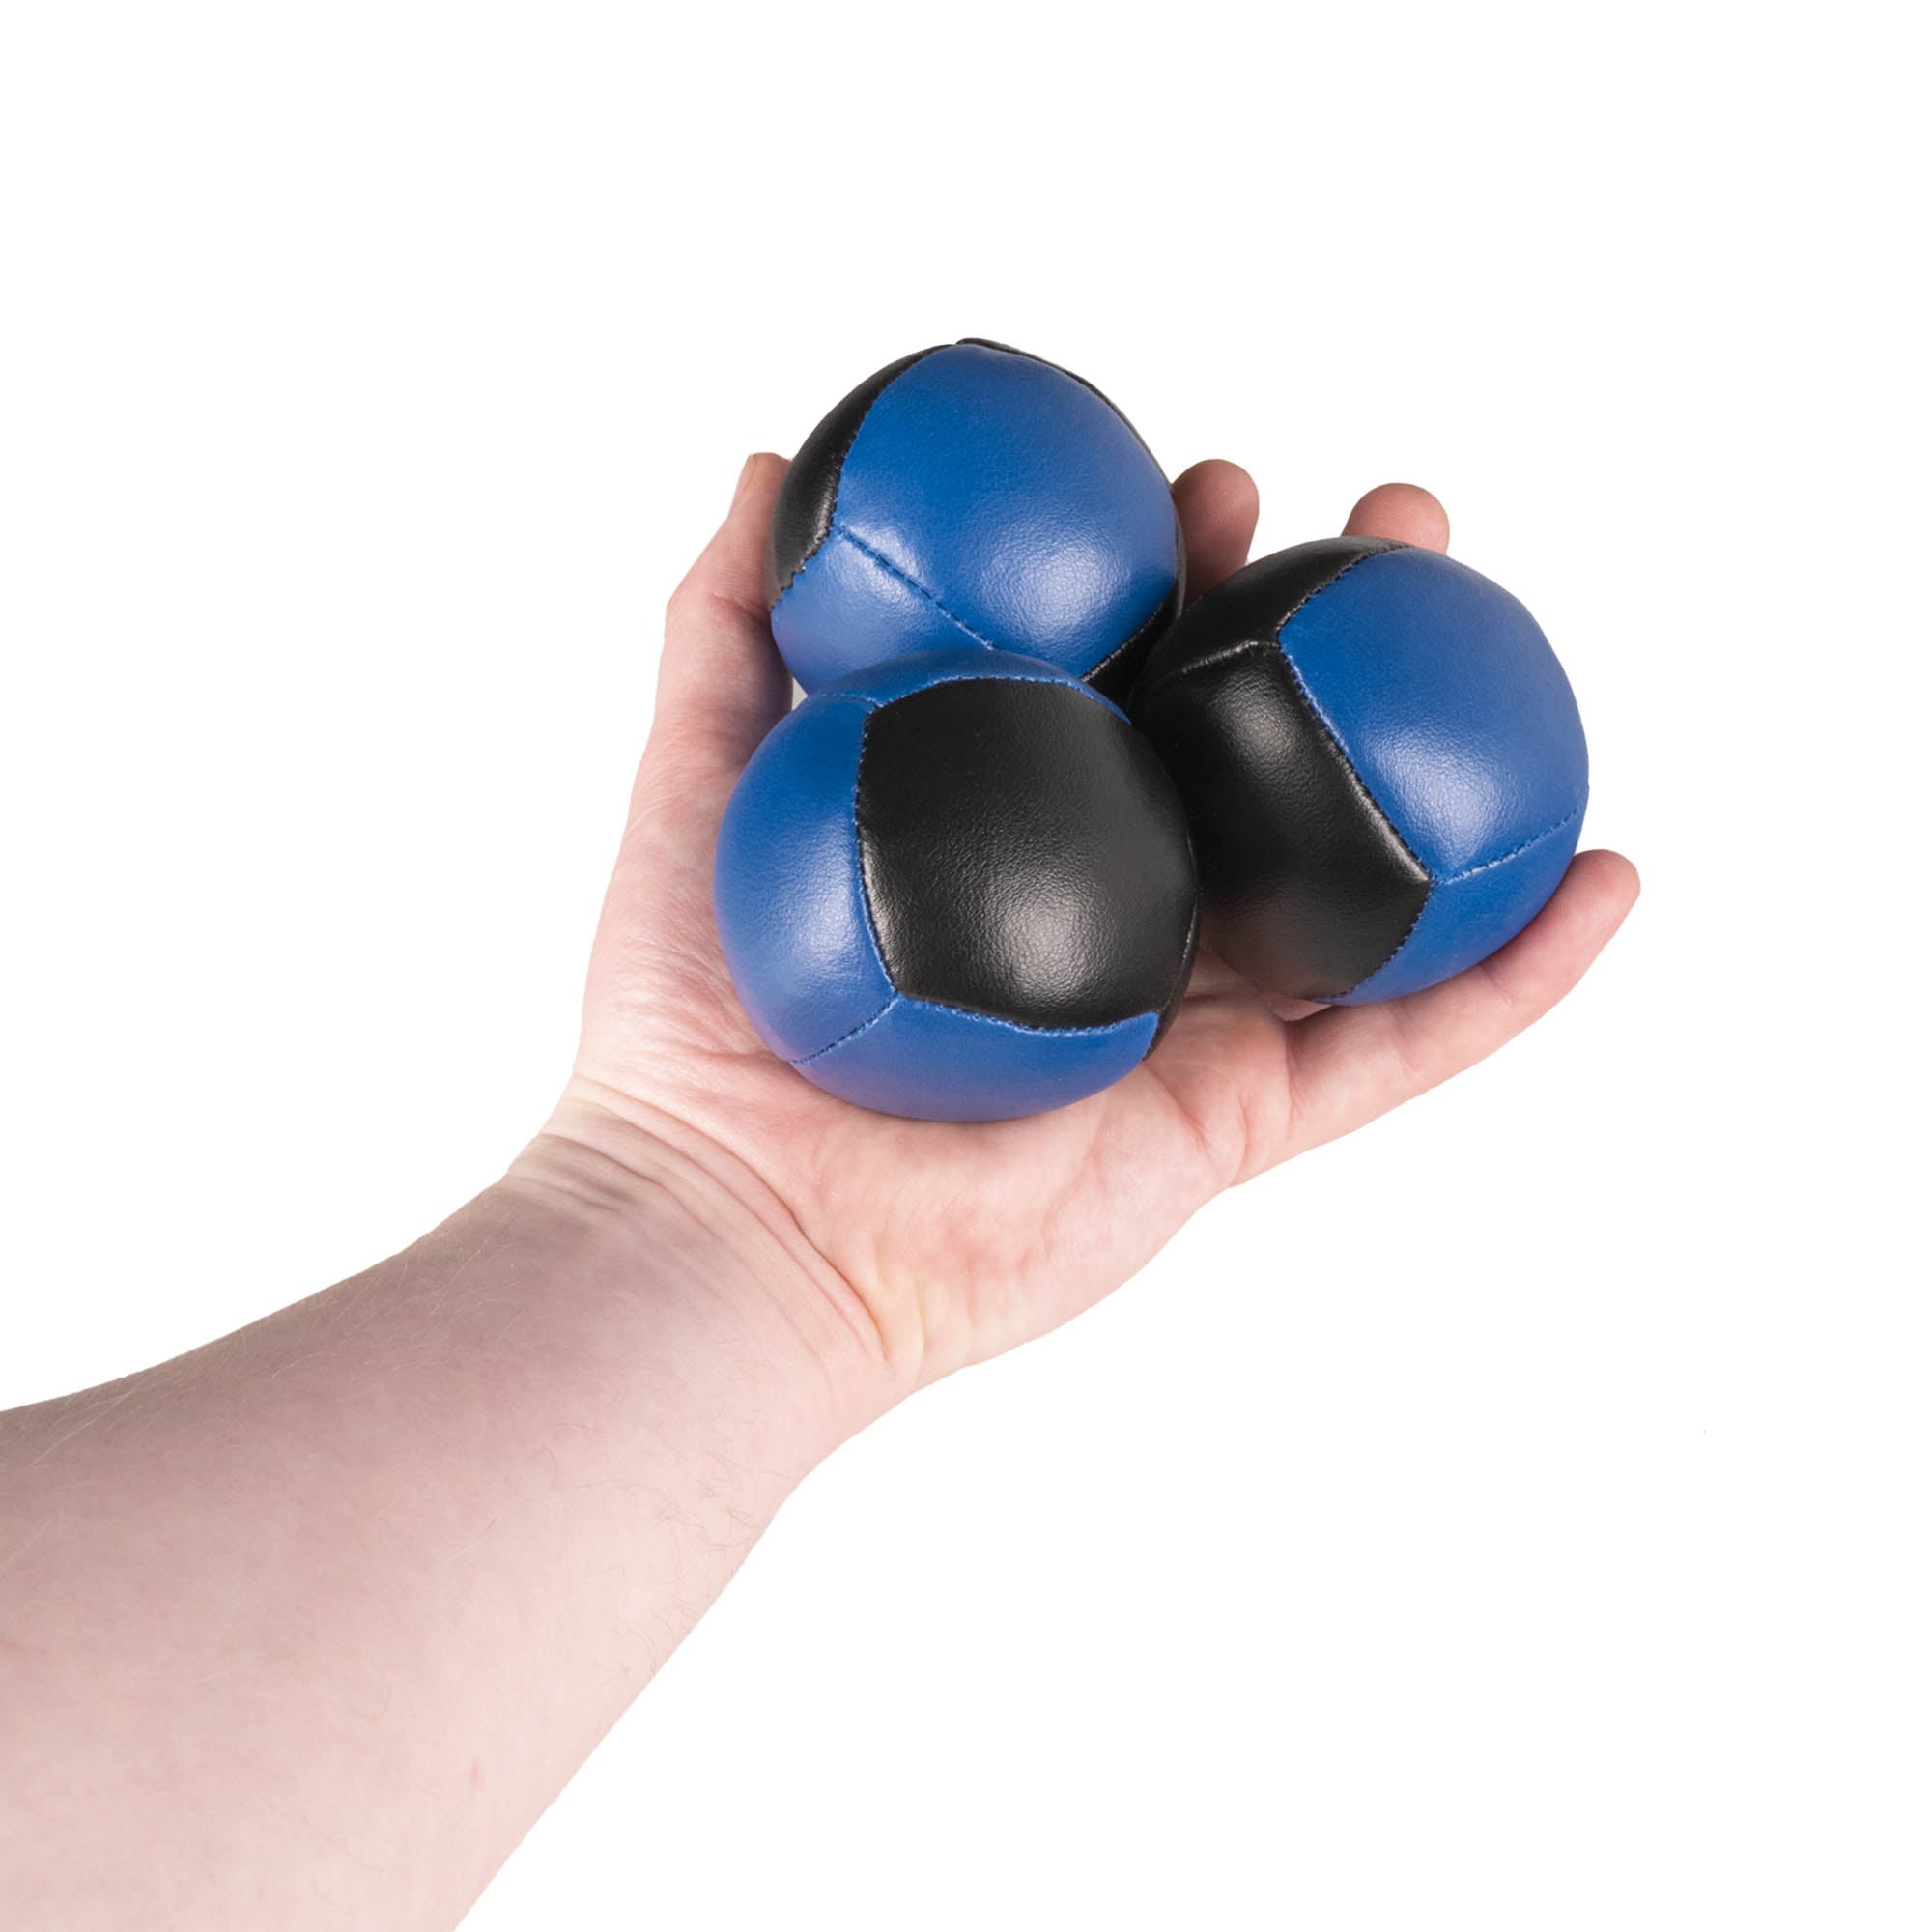 Firetoys three black/blue 110g thud juggling balls in hand